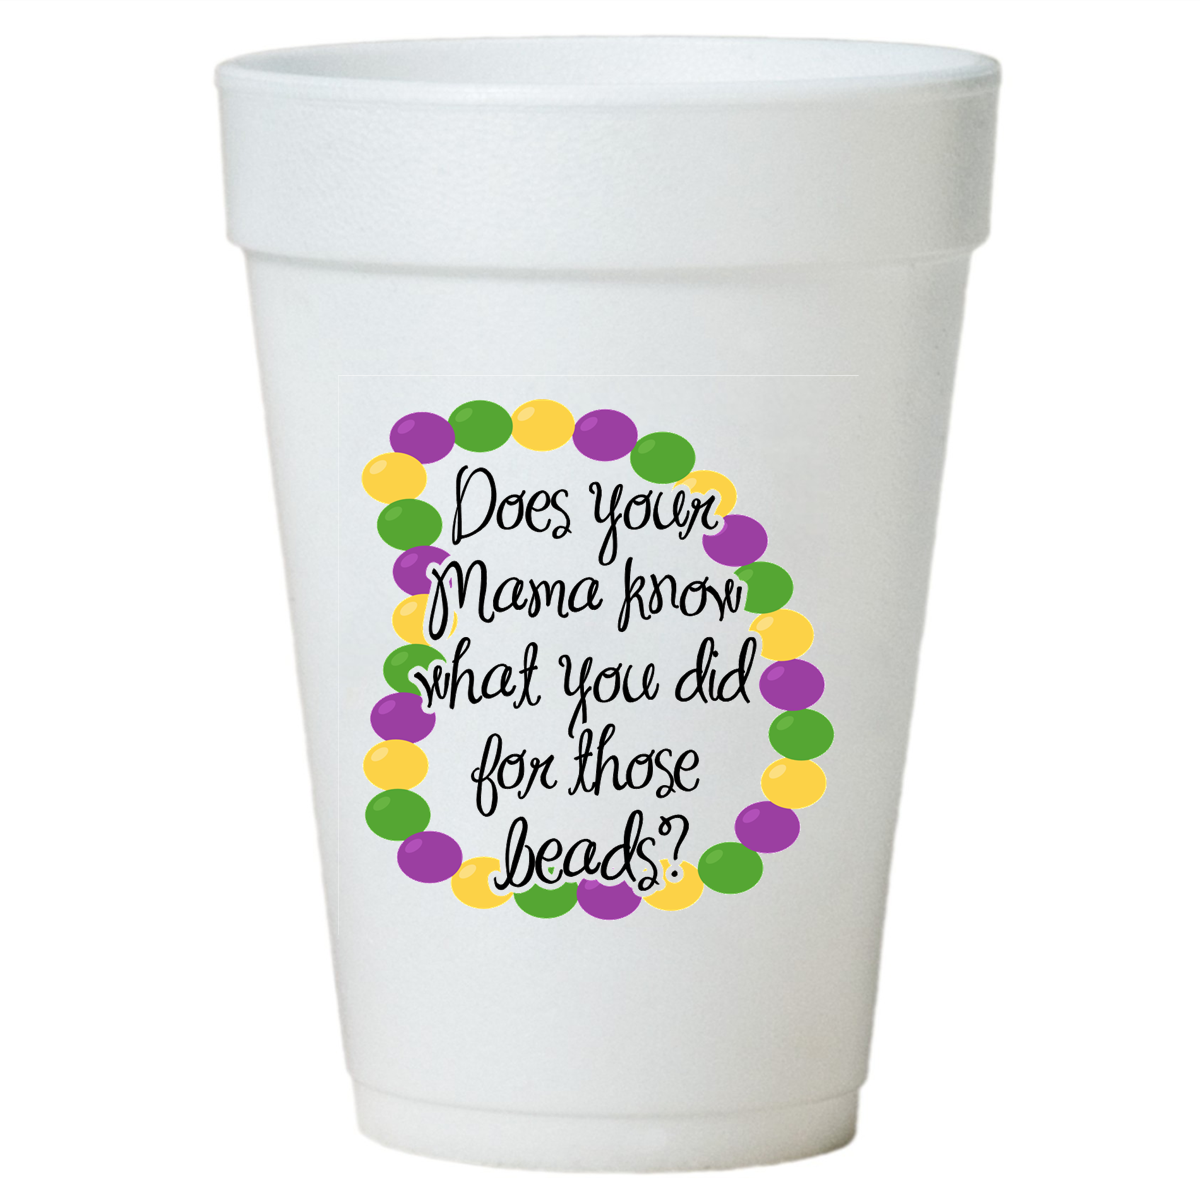 Does Your Mama Know Mardi Gras Styrofoam Cups